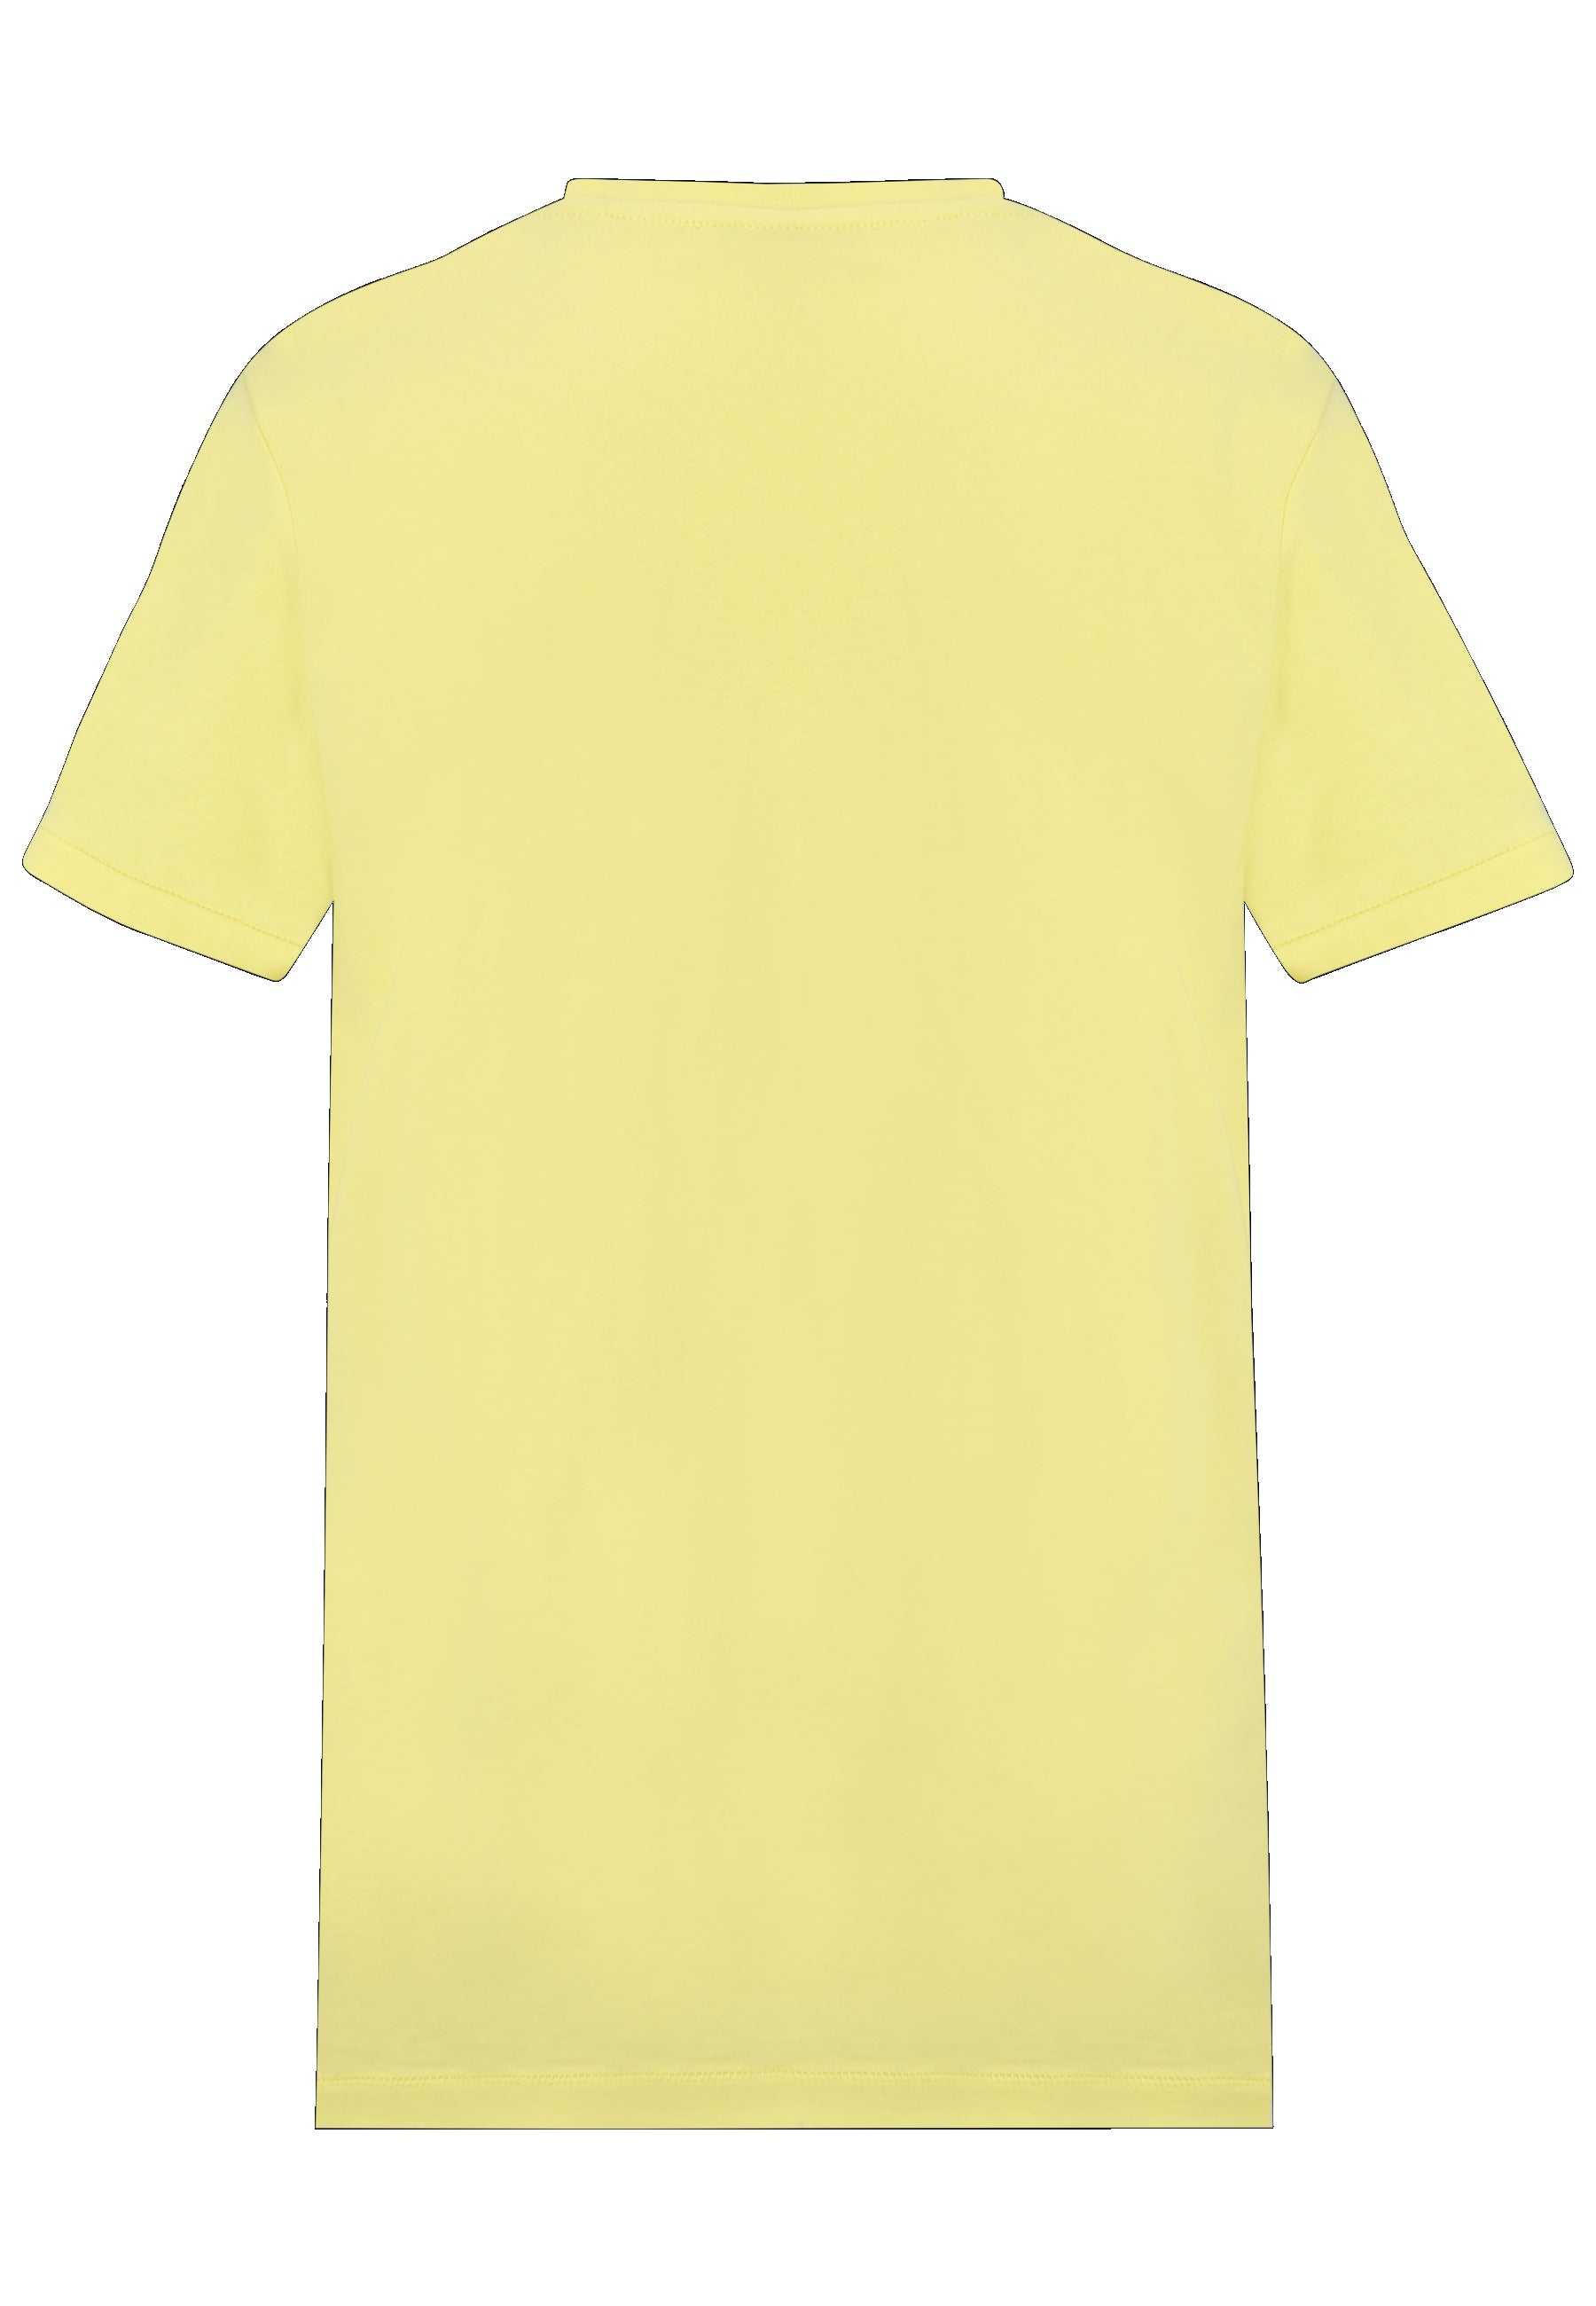 Adria Round Neck Plain Tee in Limelight T-Shirts Tamaris   